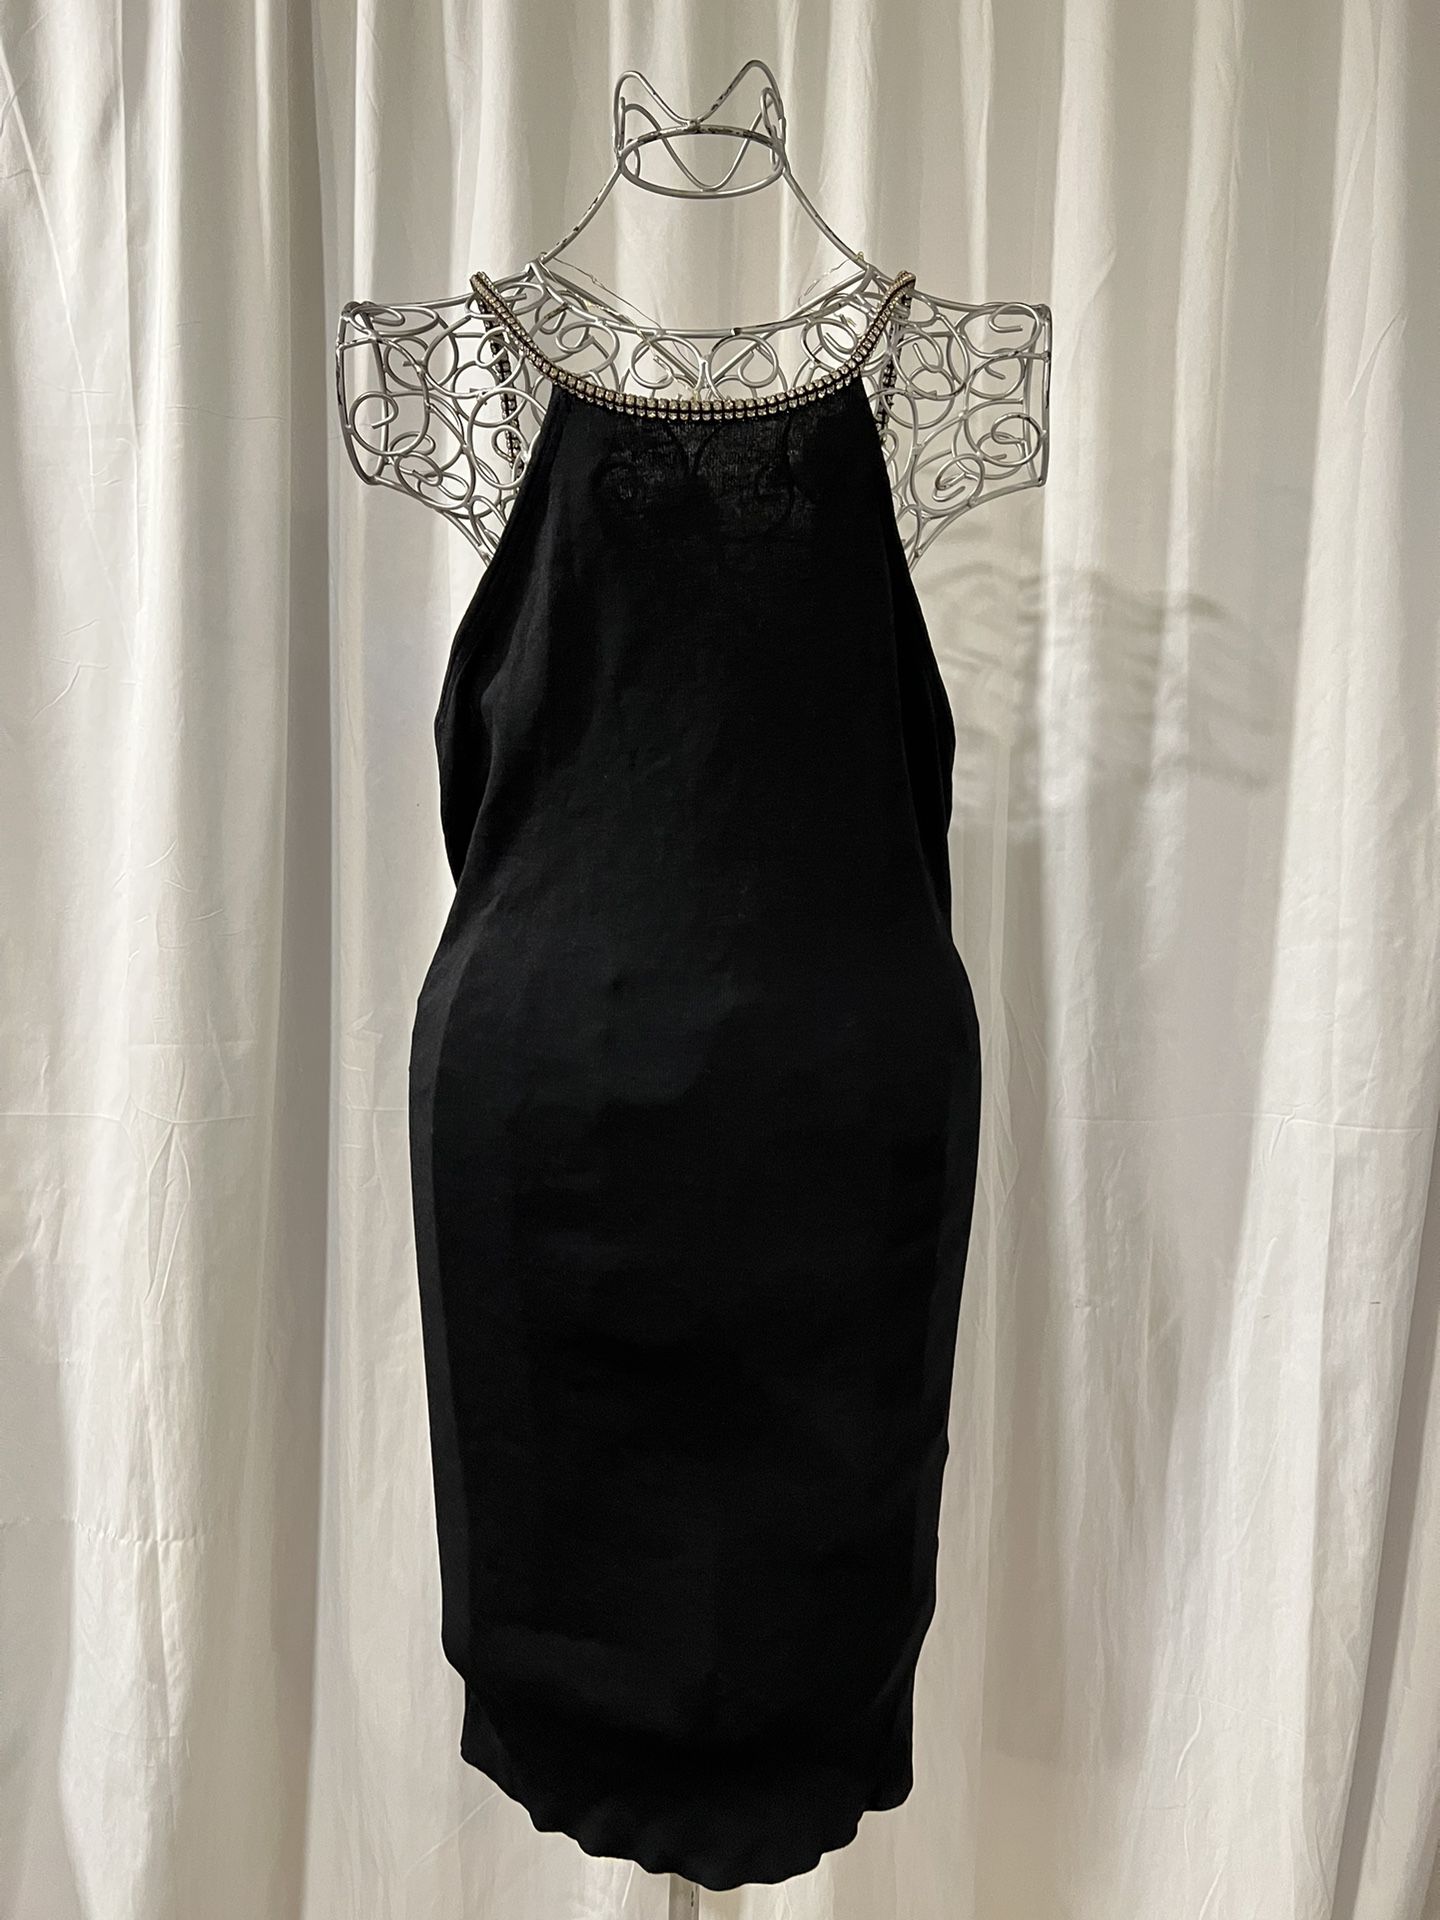 Forever 21 black dress size L/ M